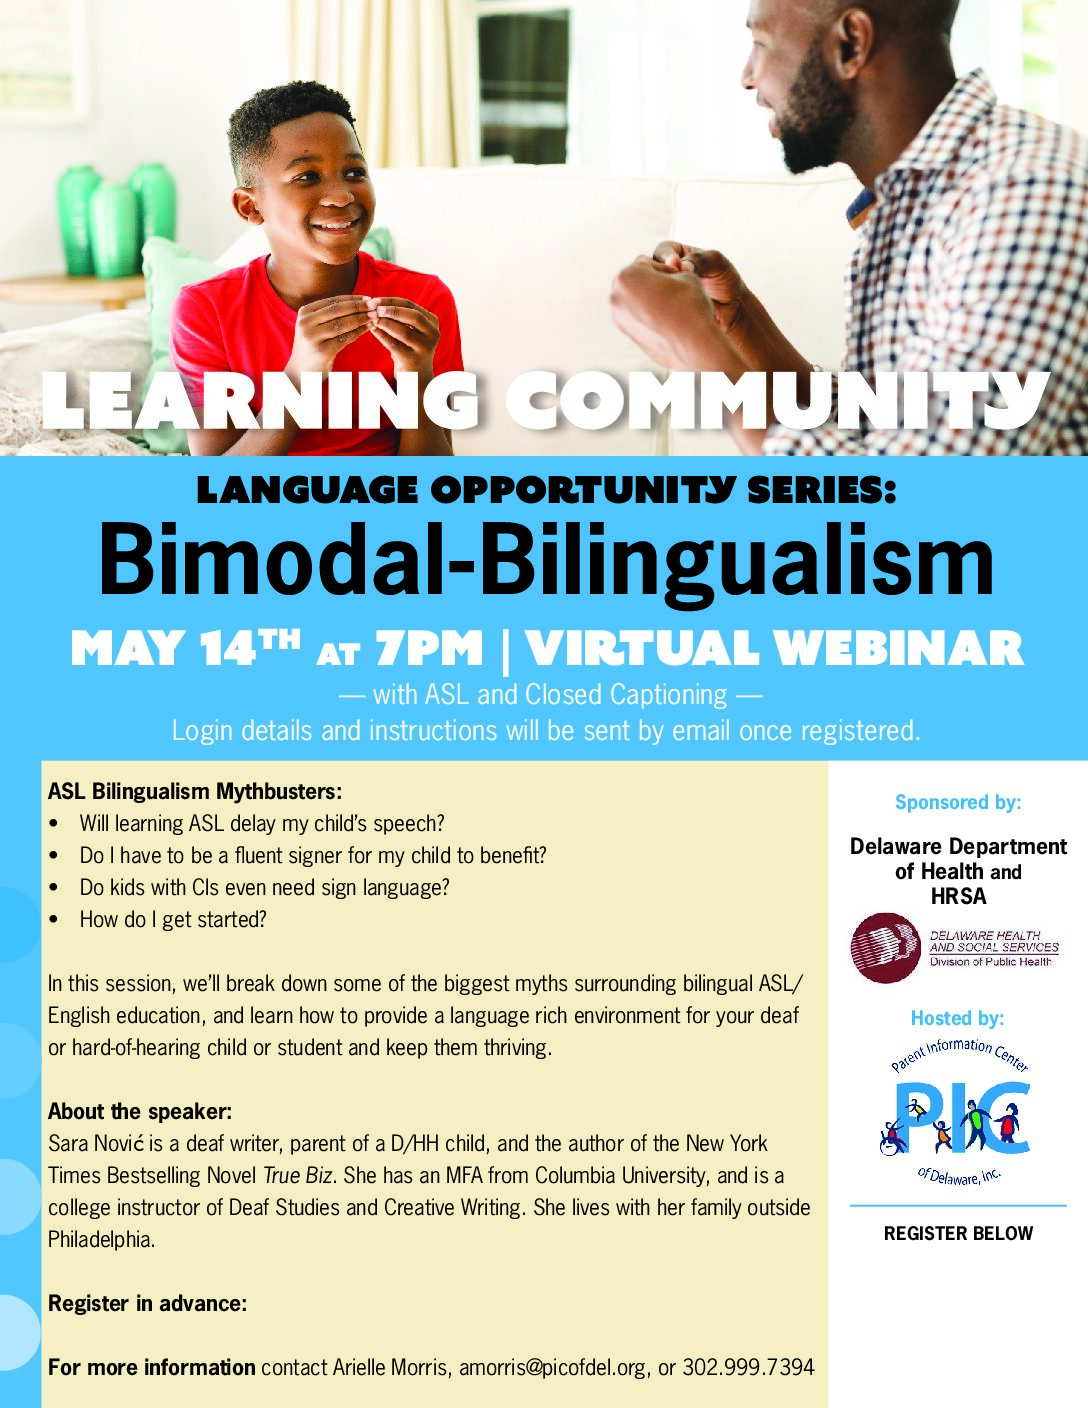 Bimodal-Bilingualism Learning Community